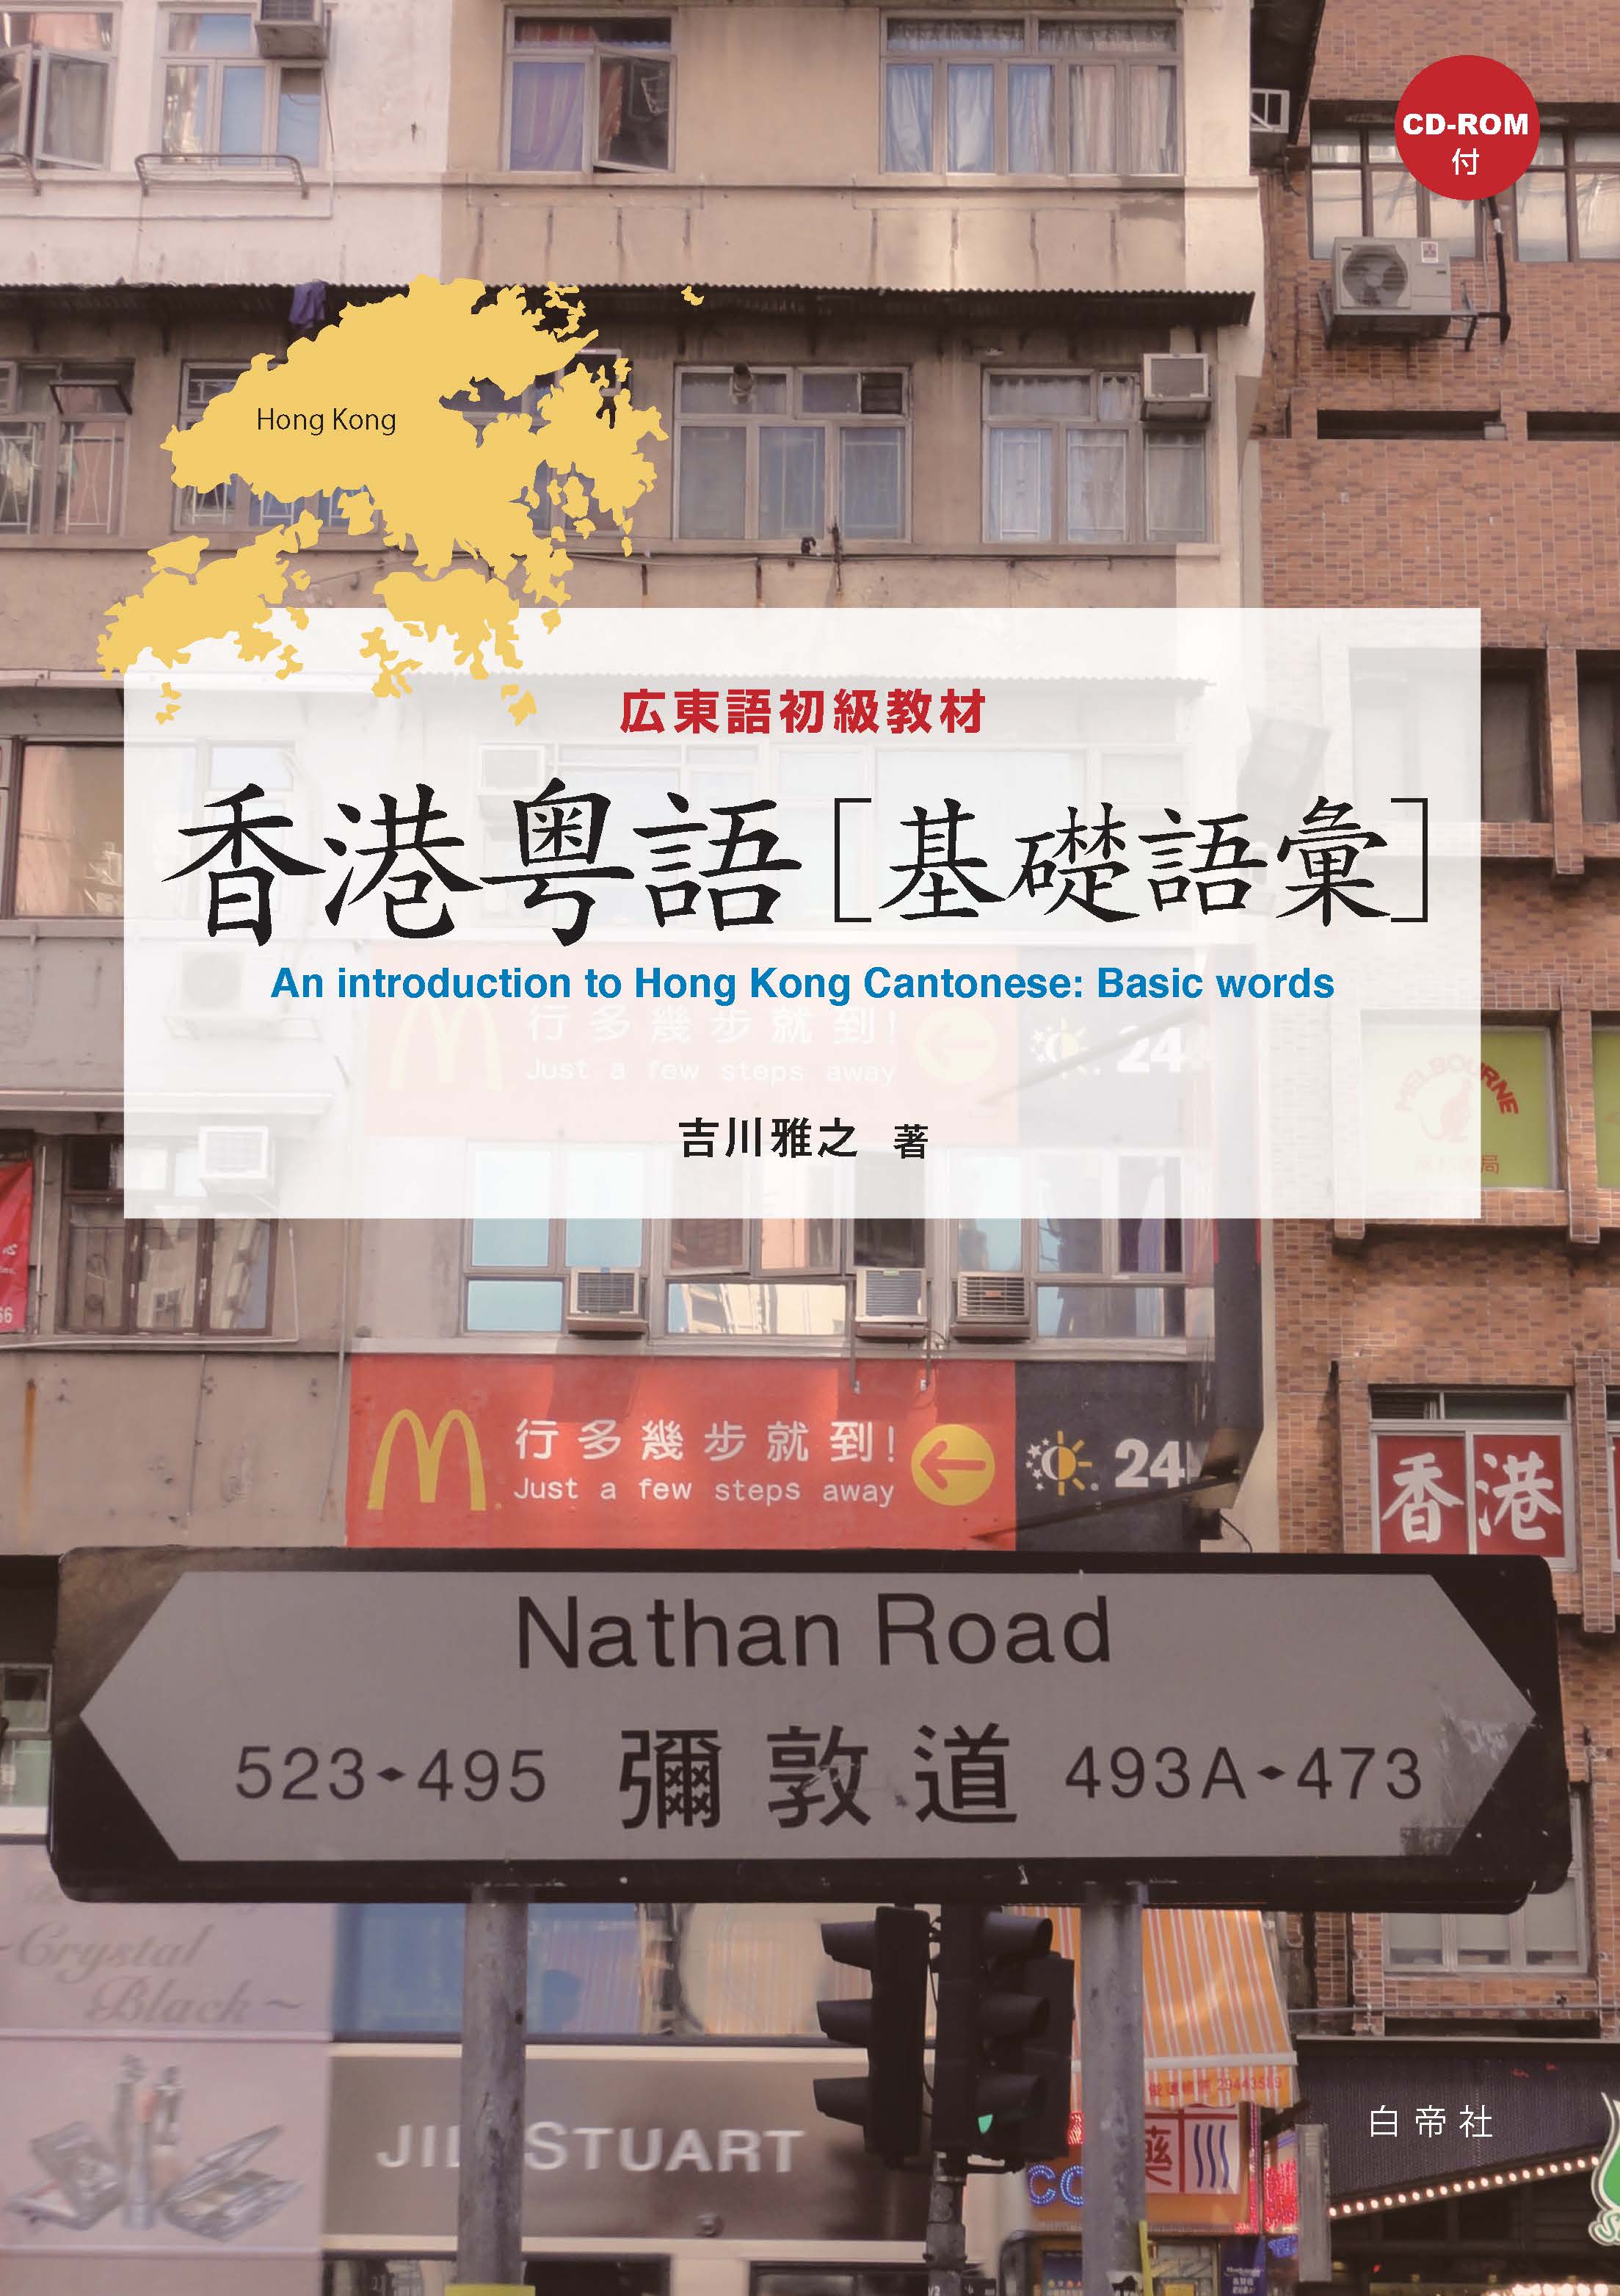 Nathan Road沿い、香港の町並みの写真の表紙